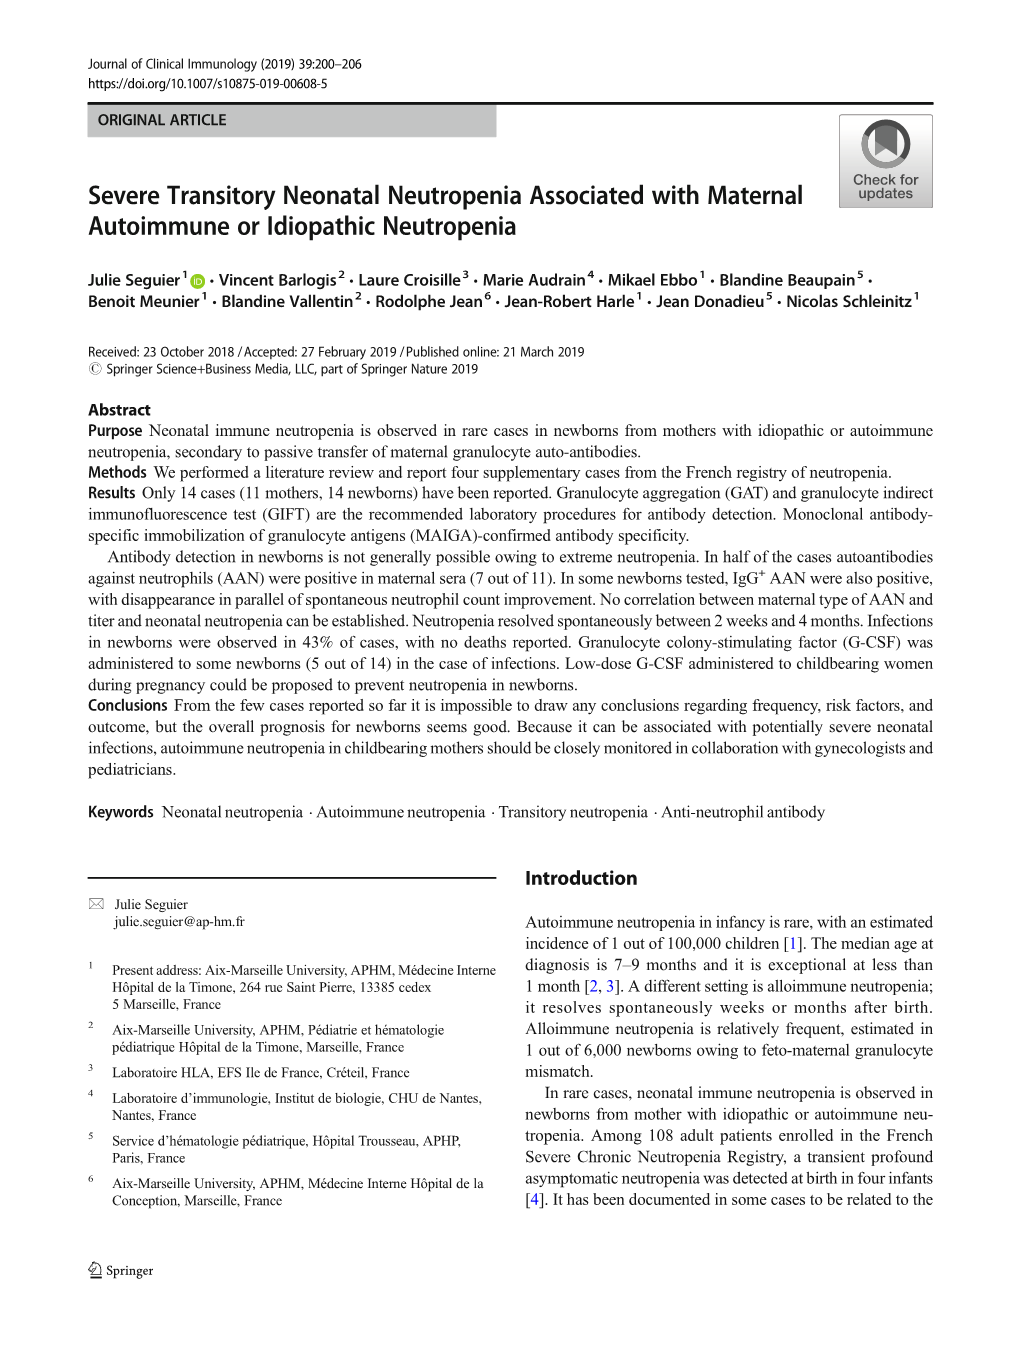 Severe Transitory Neonatal Neutropenia Associated with Maternal Autoimmune Or Idiopathic Neutropenia